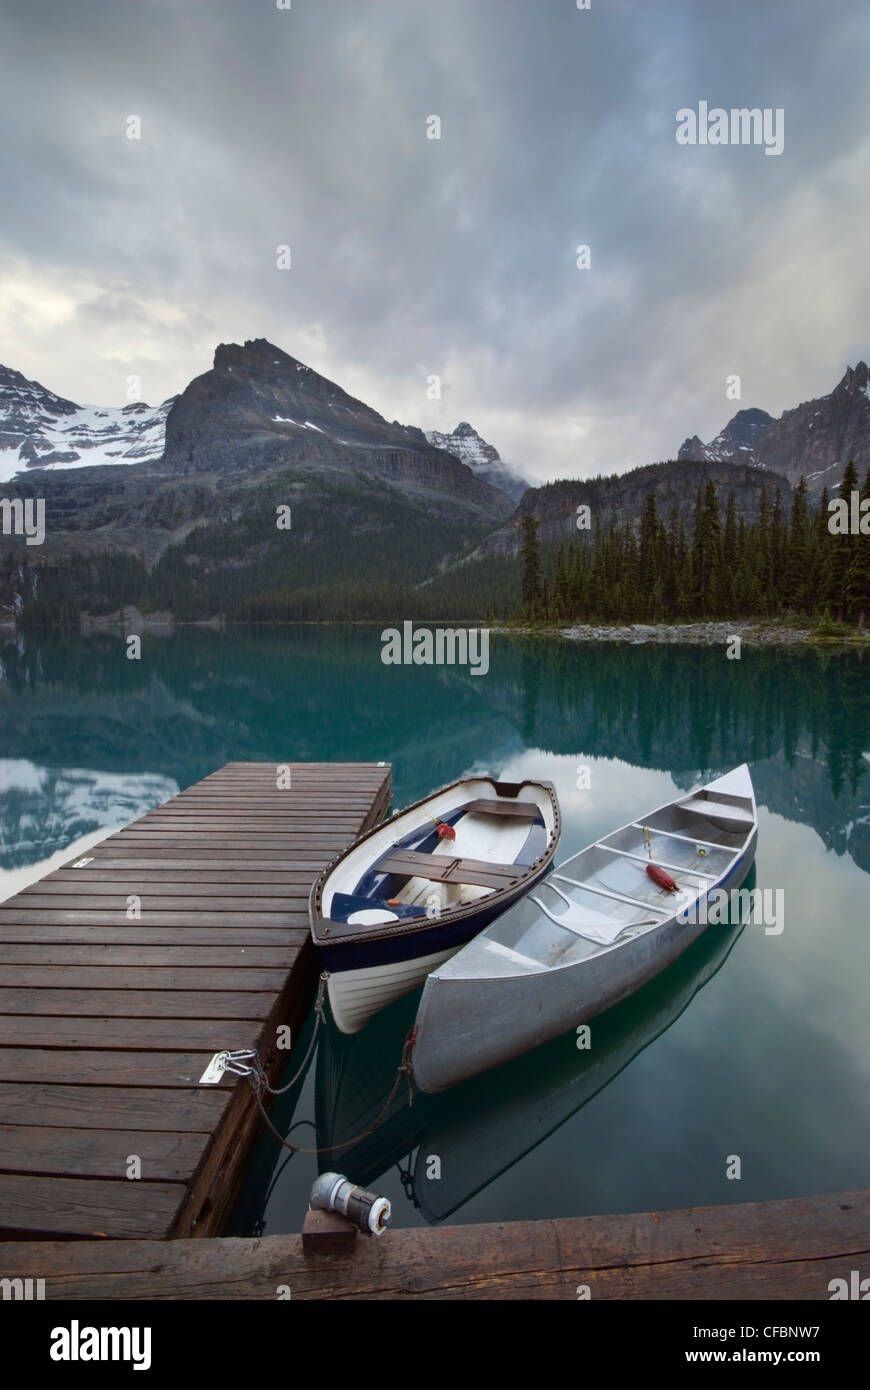 Barcos y dock, Lago O'Hara, montaña, Pico Ringrose Yukness, Parque Nacional Yoho, British Columbia, Canadá Foto de stock